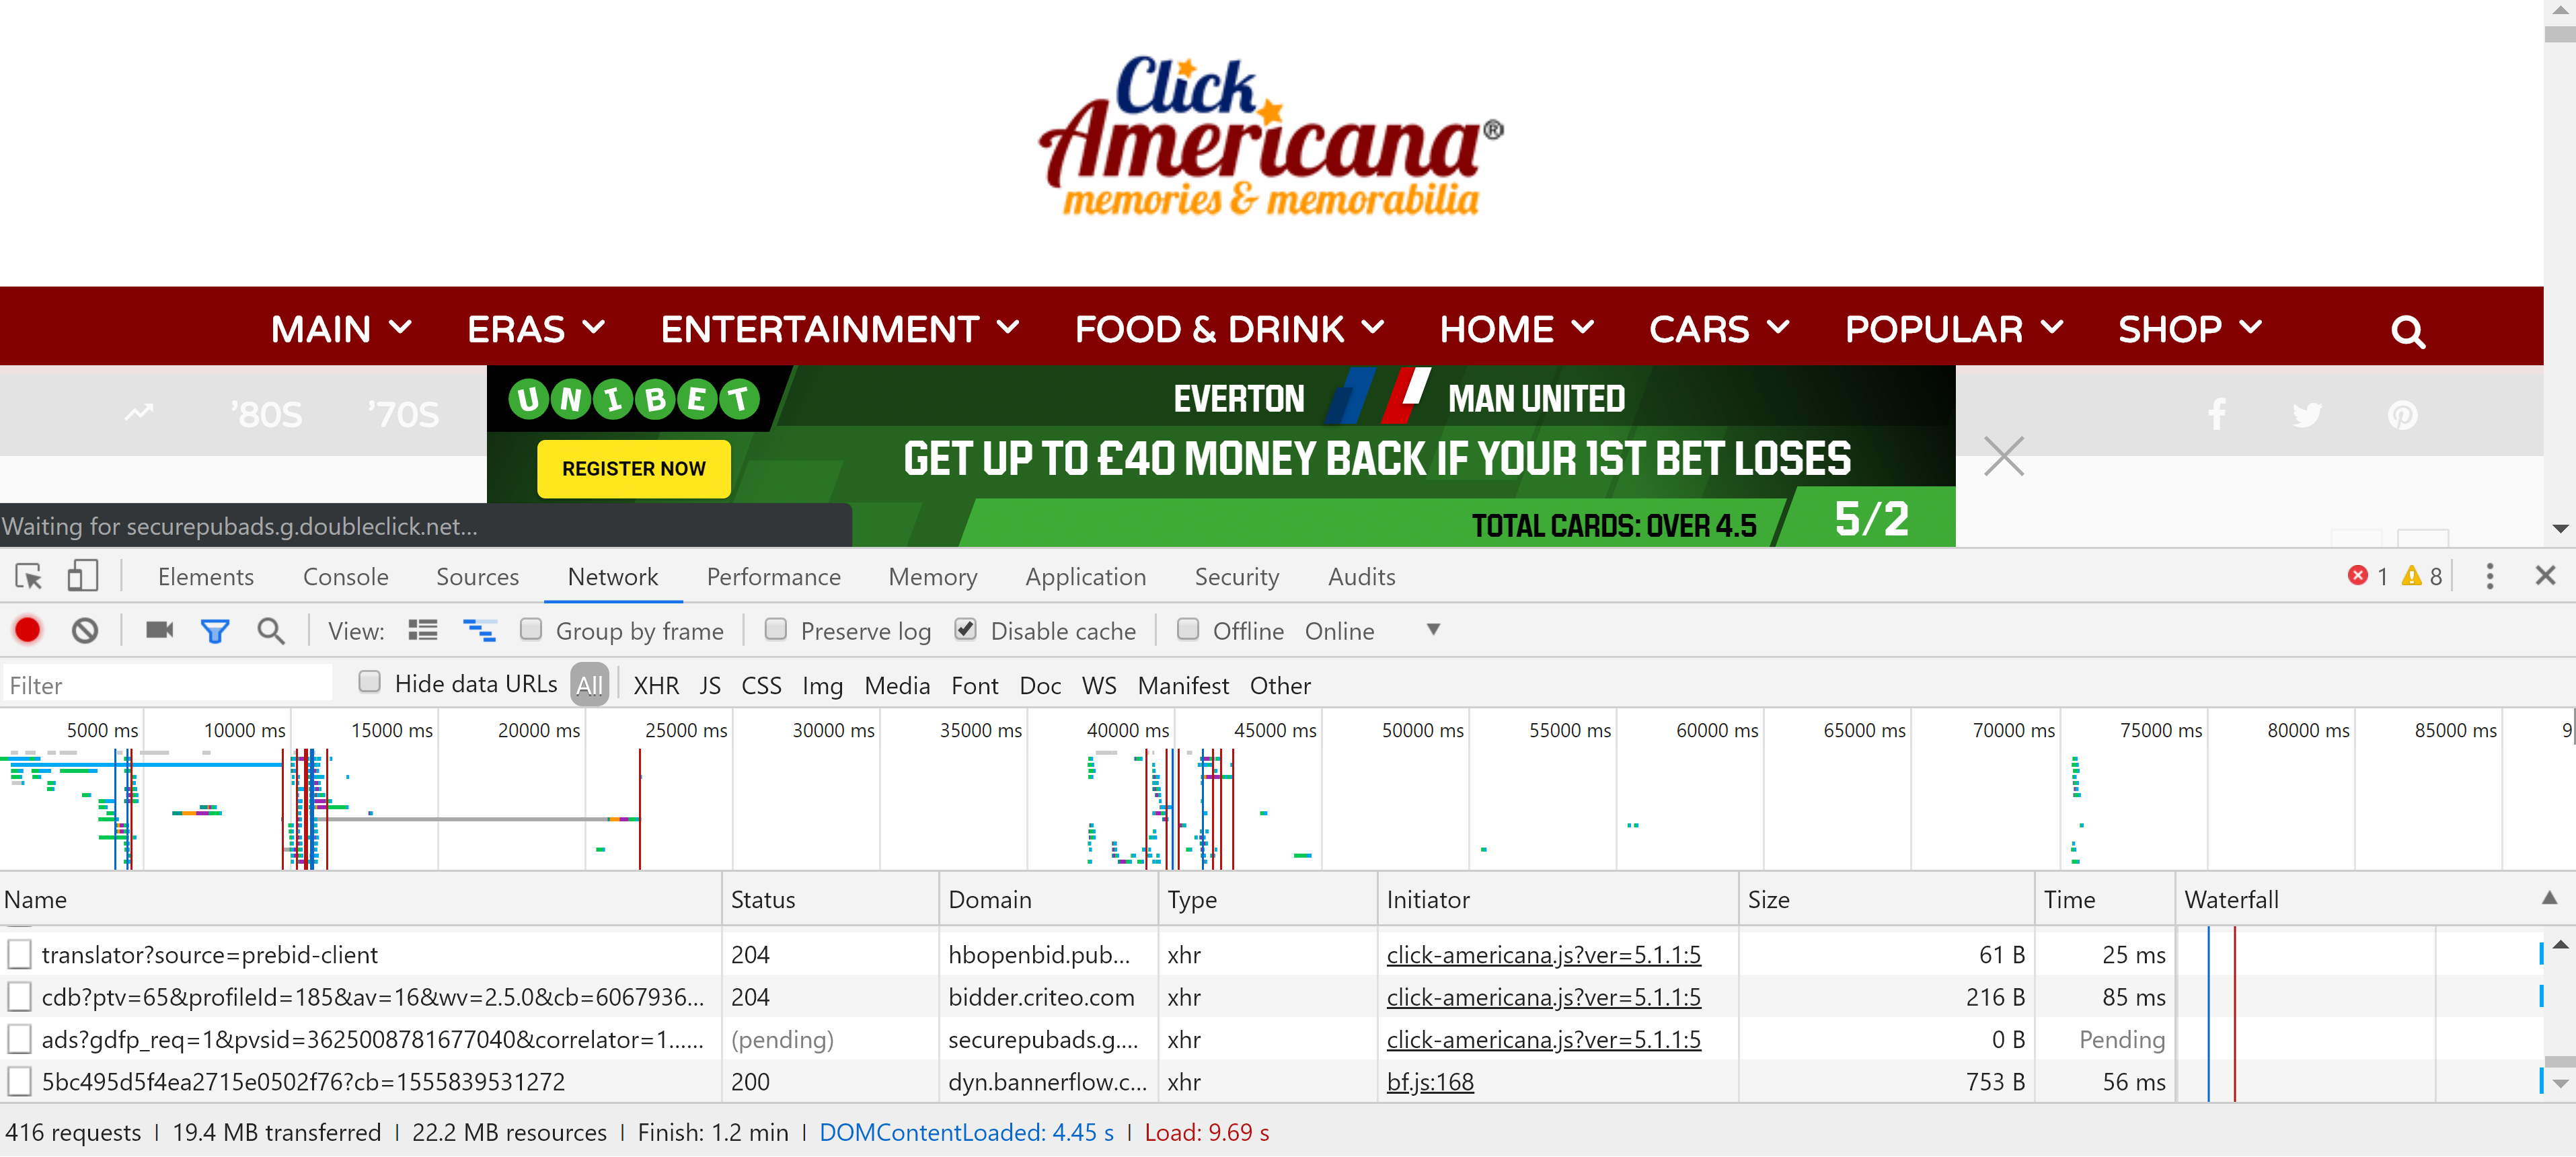 www.clickamericana.com Speed Comparison Before